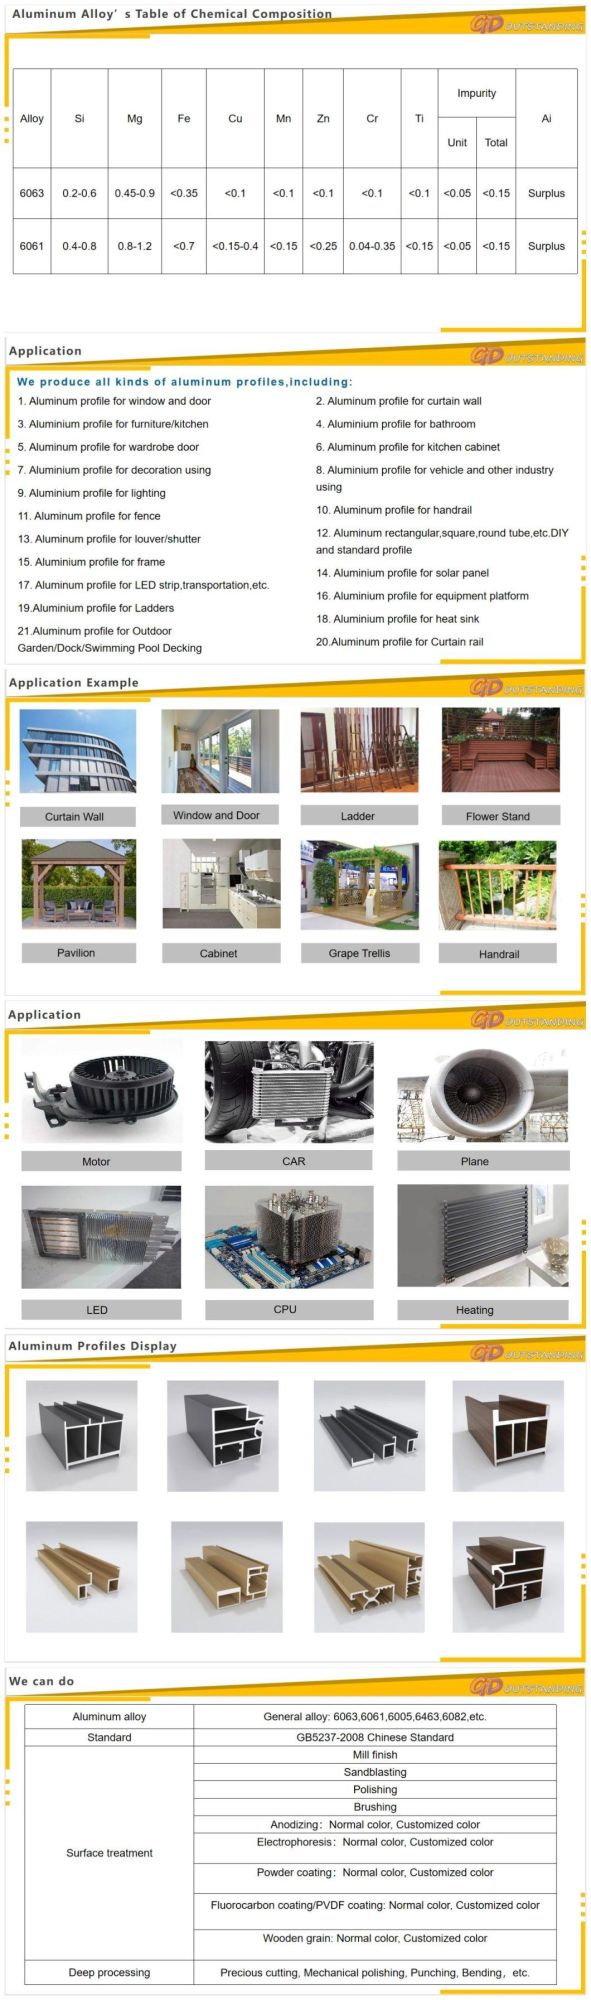 Industrial Aluminum Profiles for Window/Door/Fence Manufacturing